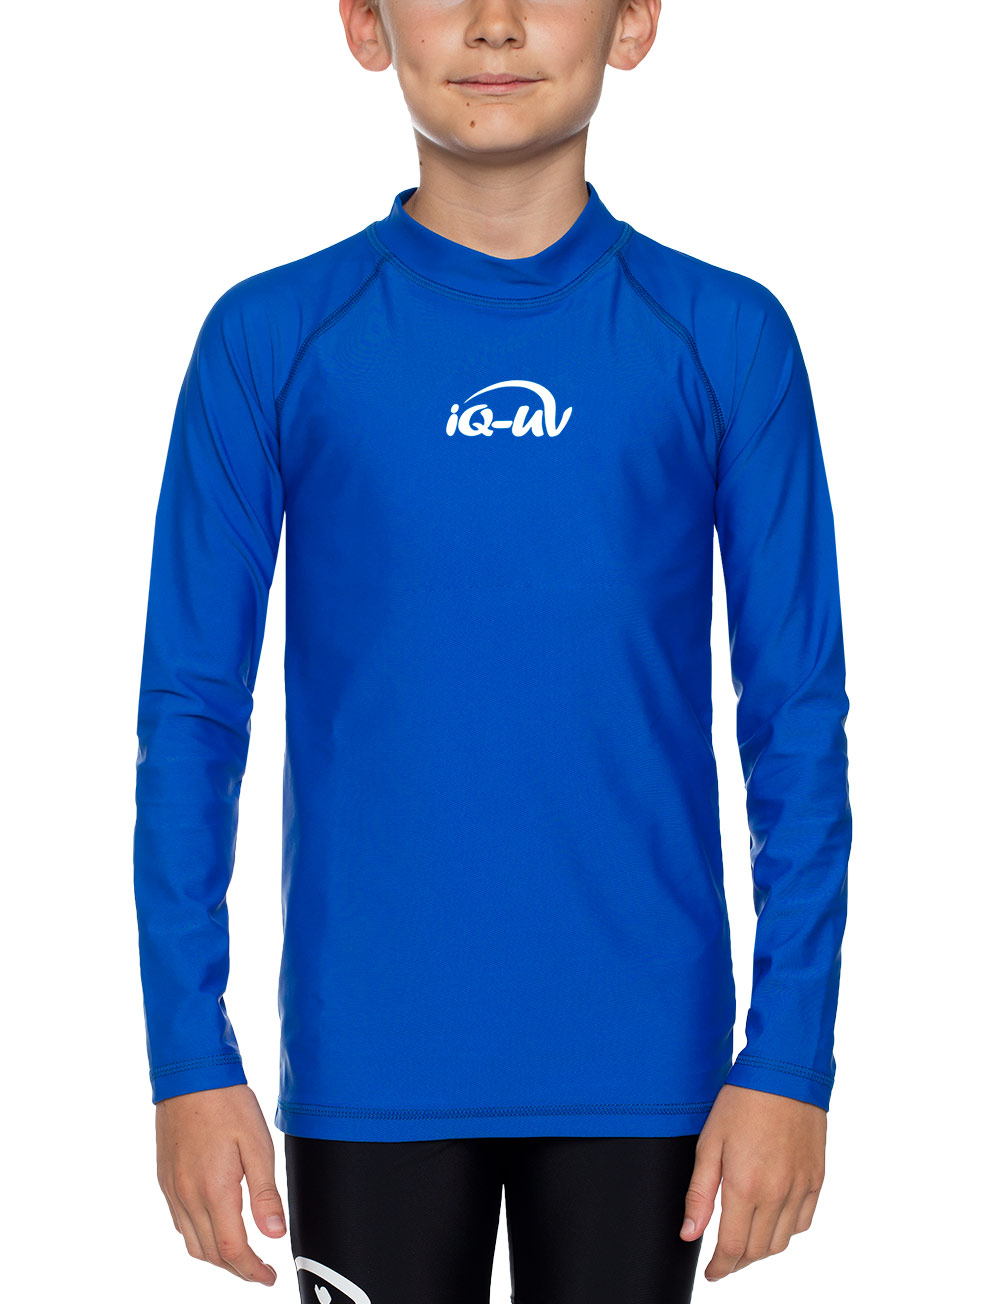 UV 50+ langarm Shirt für Kinder Econyl aus recyceltem Material blau